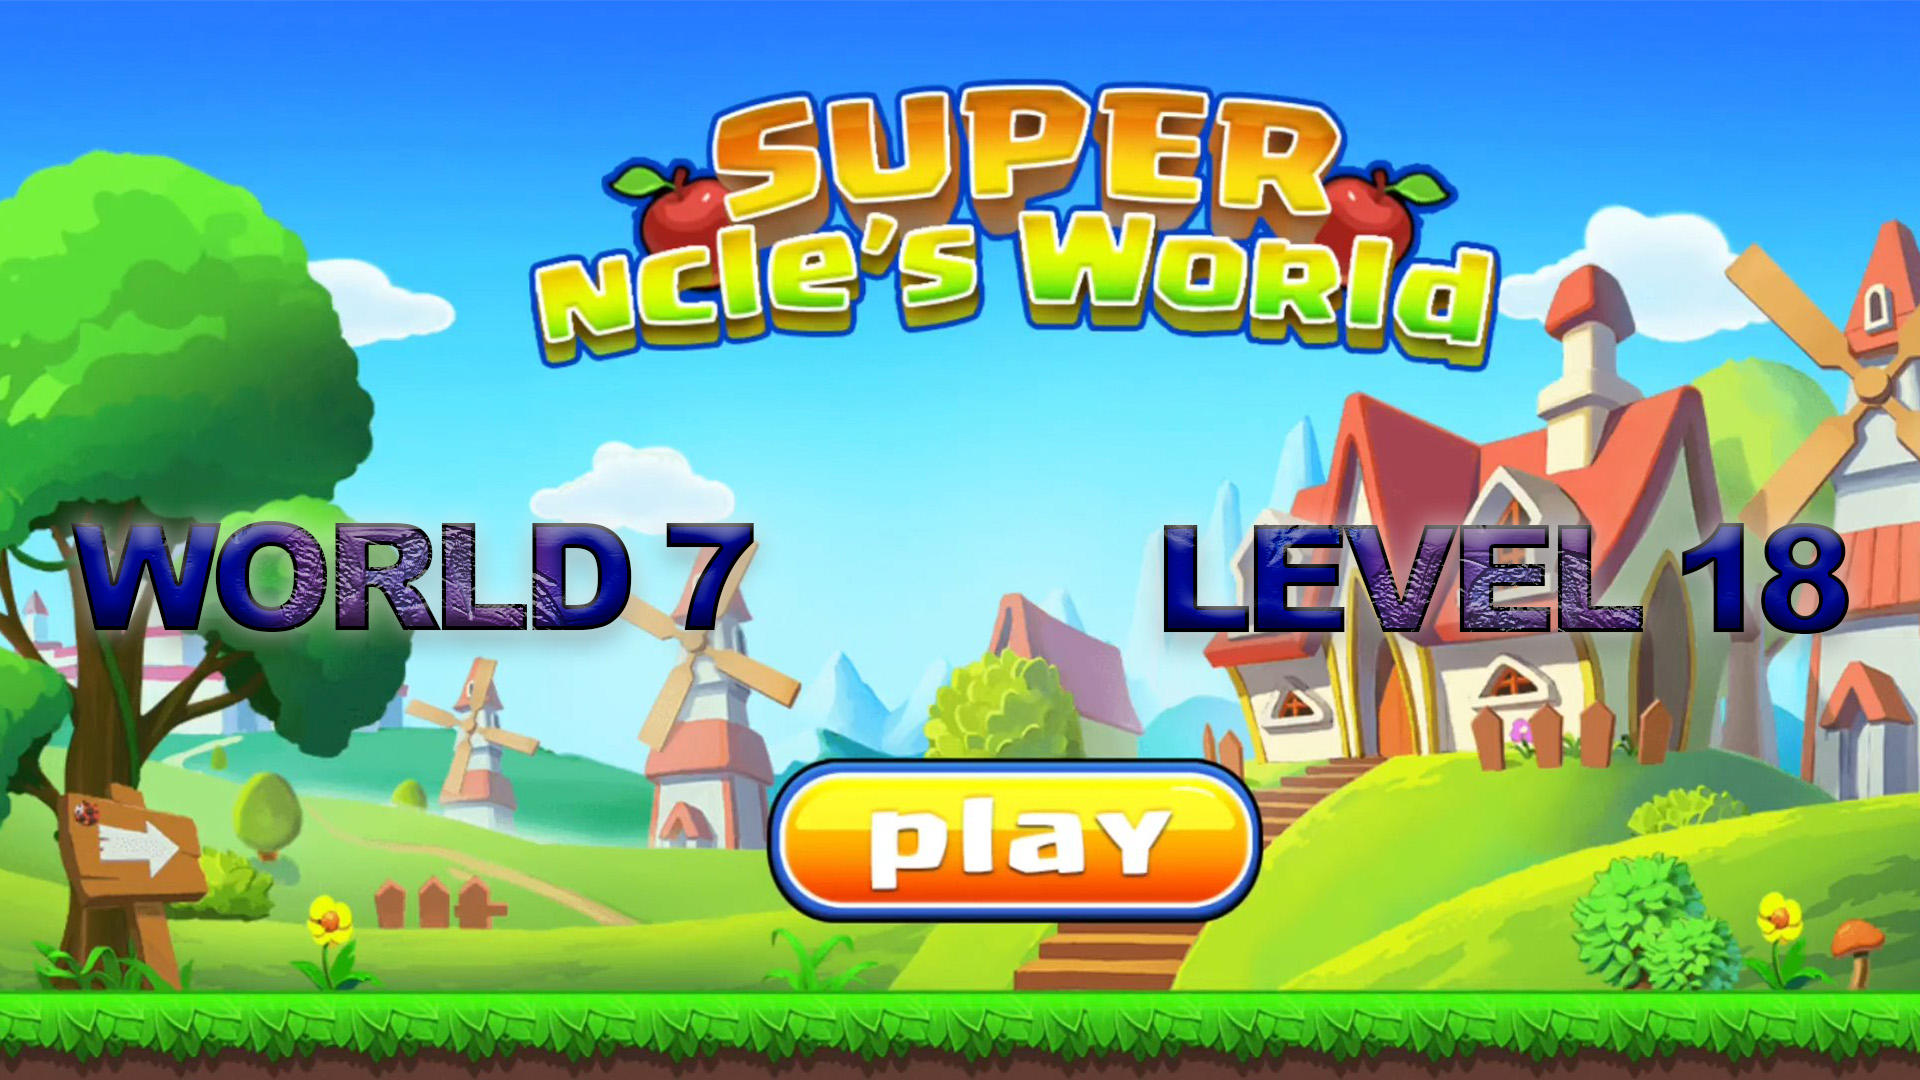 Super ncle's  World 7. Level 18.